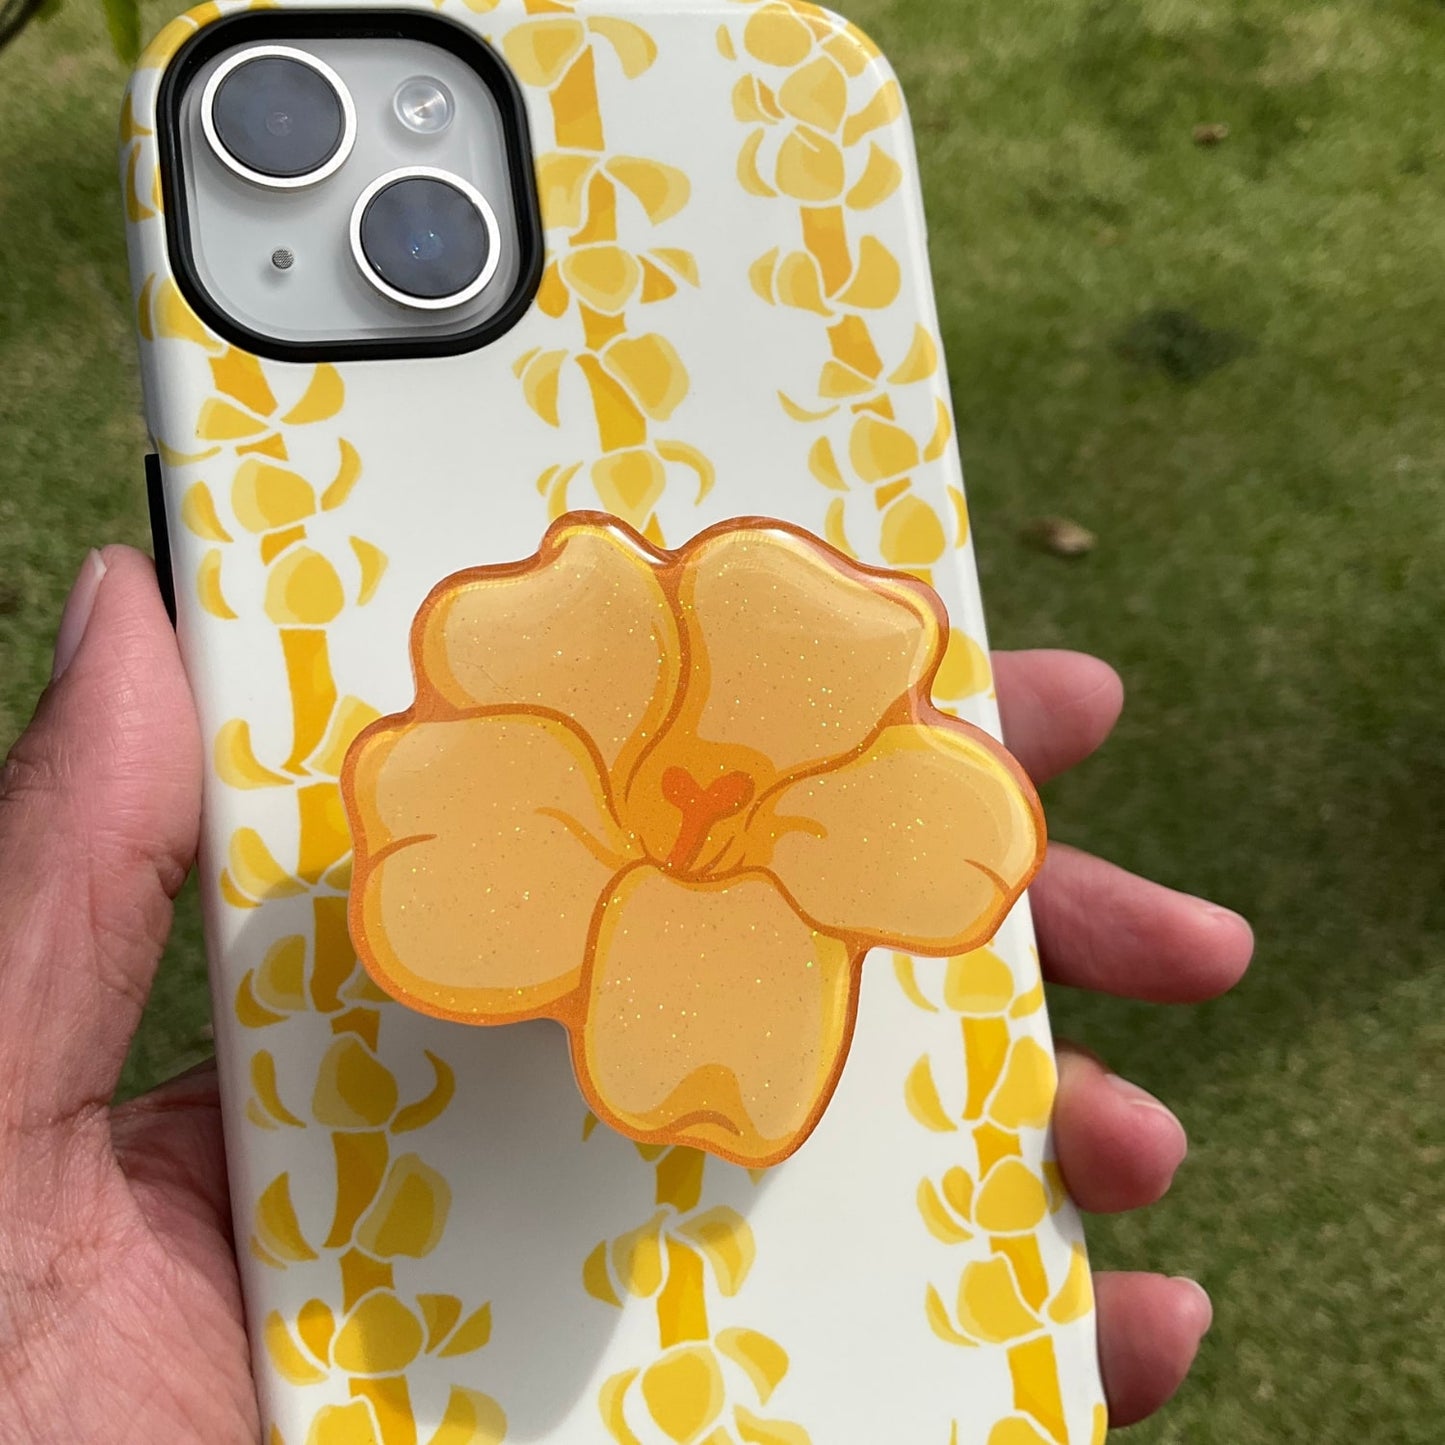 popsocket for hawaii - puakenikeni flower - on the back of a hawaiian iphone case